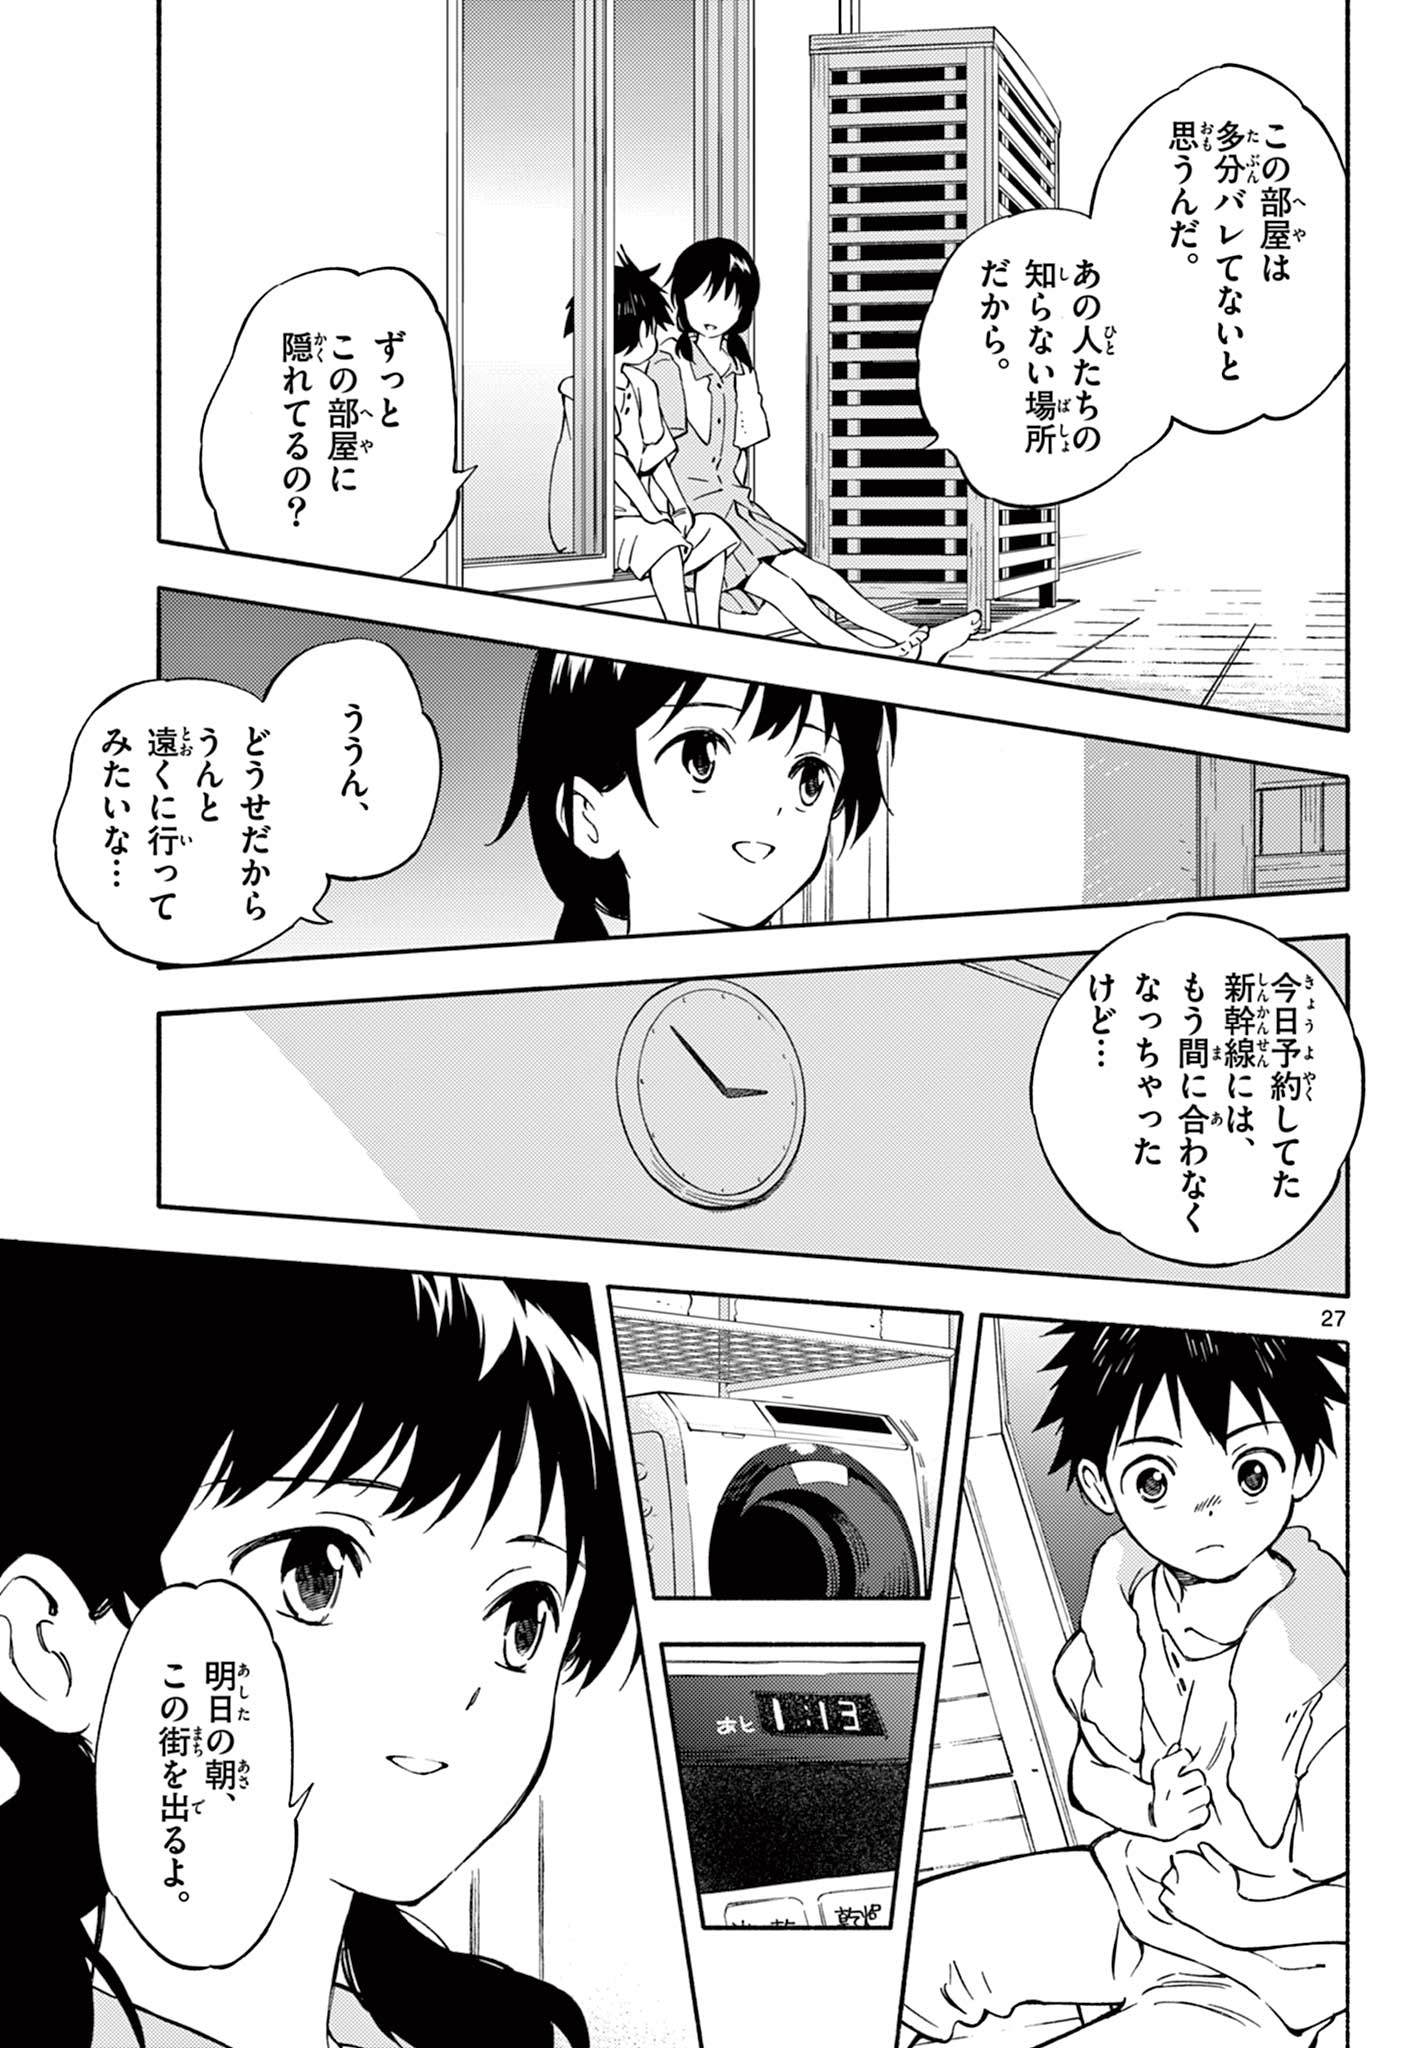 Nami no Shijima no Horizont - Chapter 12.2 - Page 13